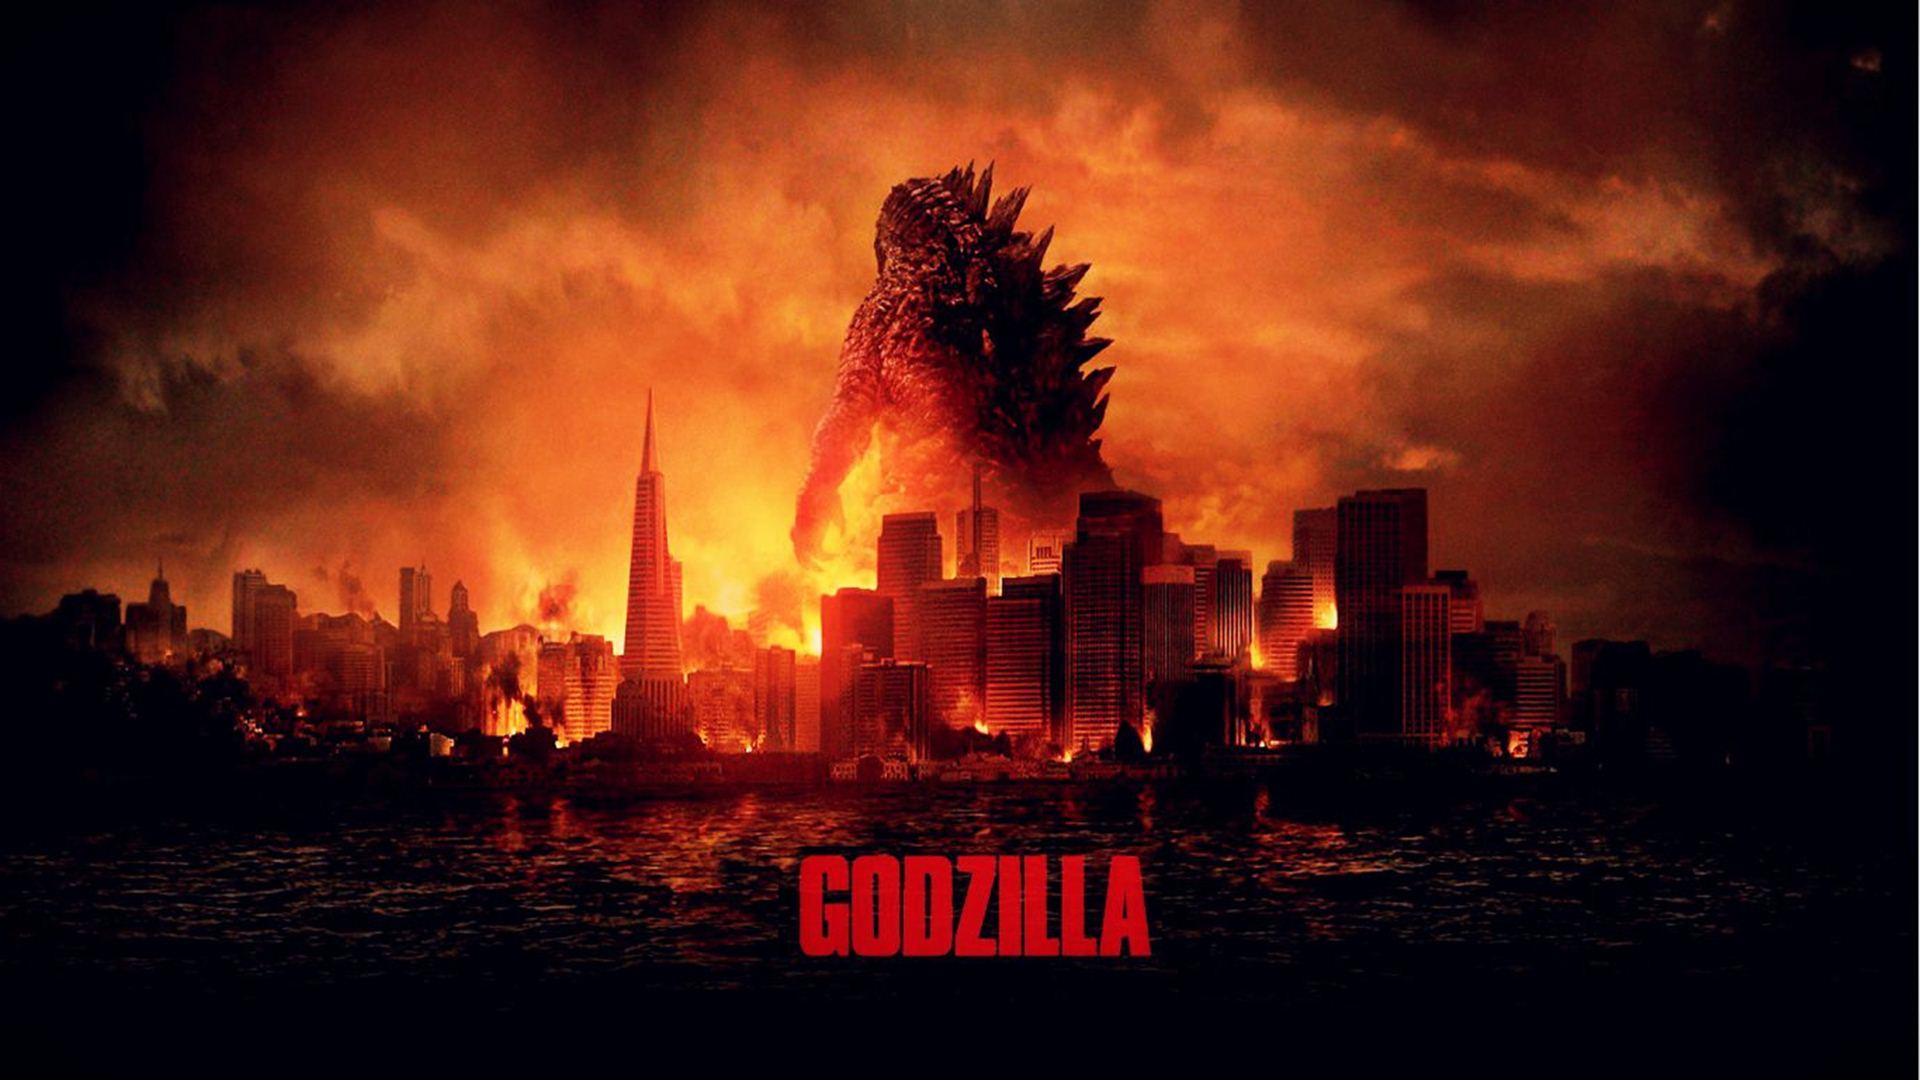 Godzilla WallpaperUSkY.com